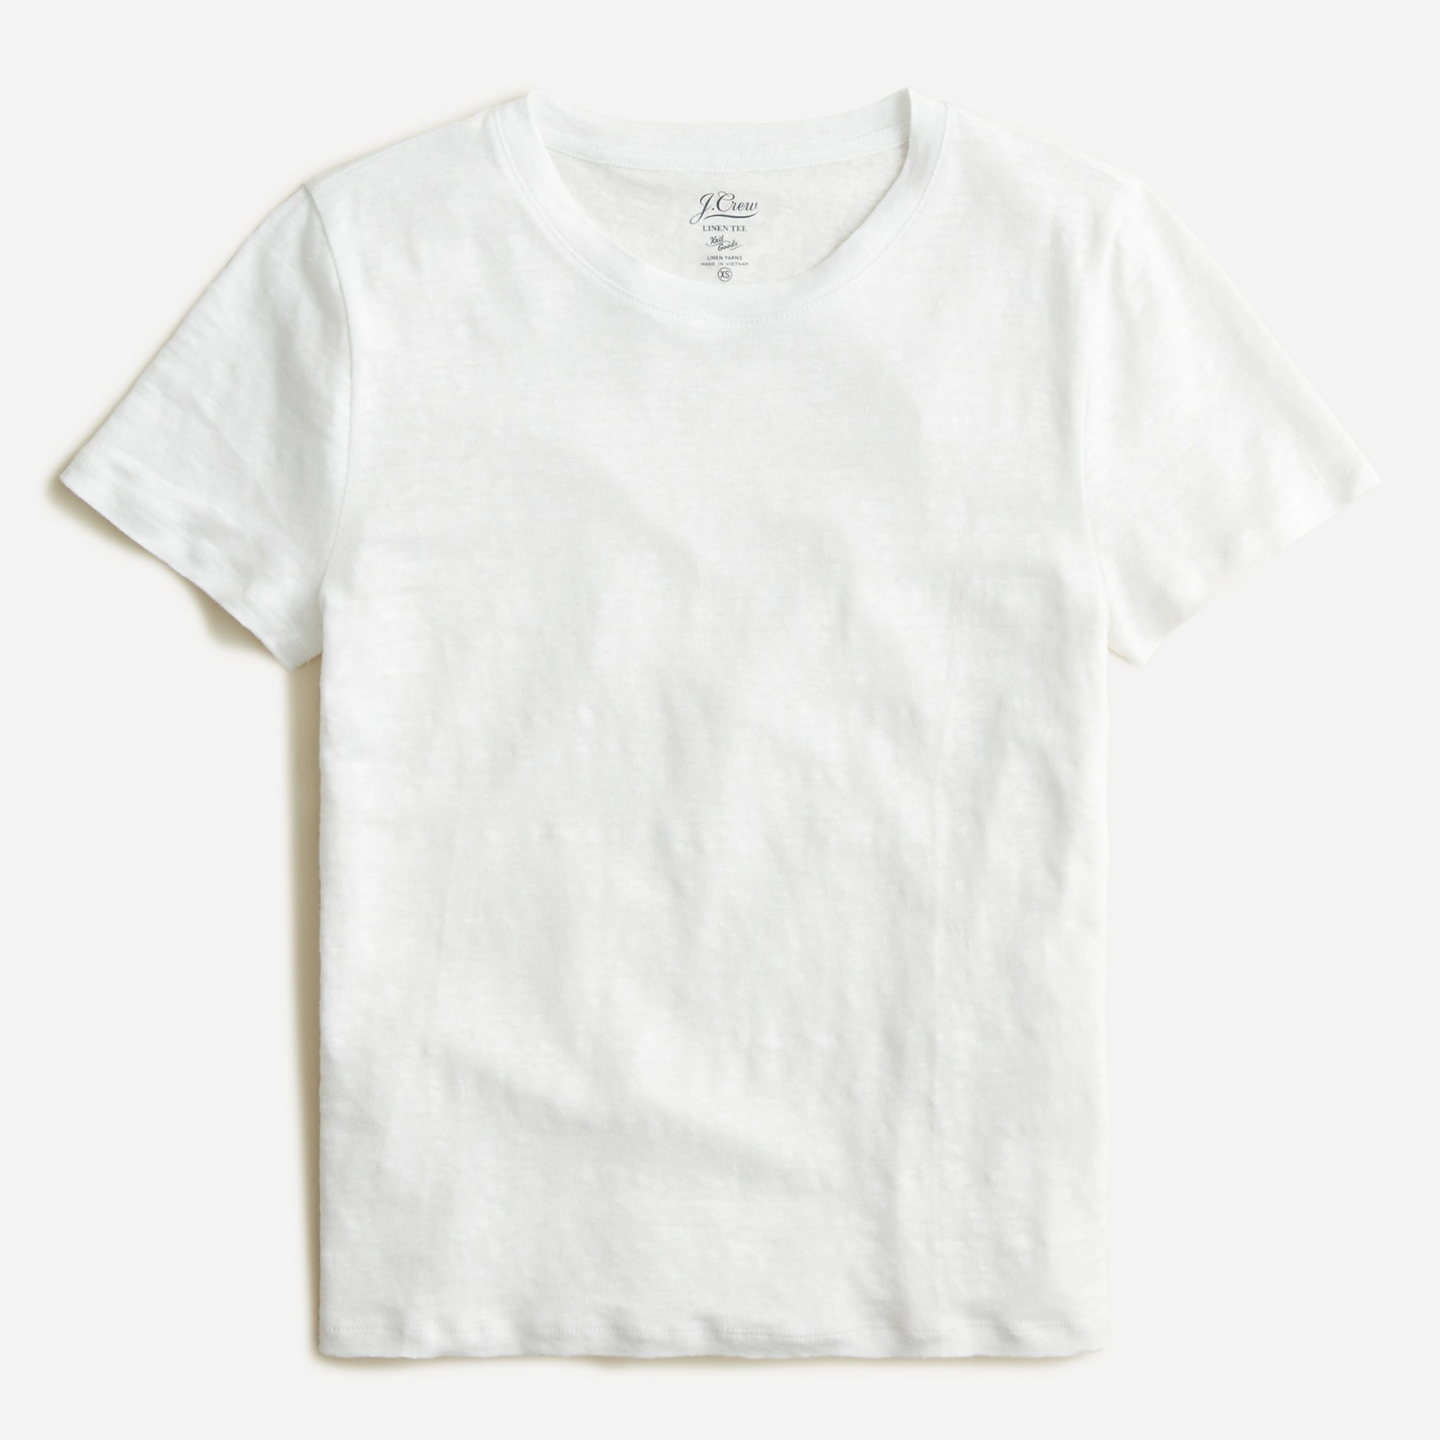 White linen tee from J. Crew. #over50fashion #fashionover50 #whitetshirts #whitelinen